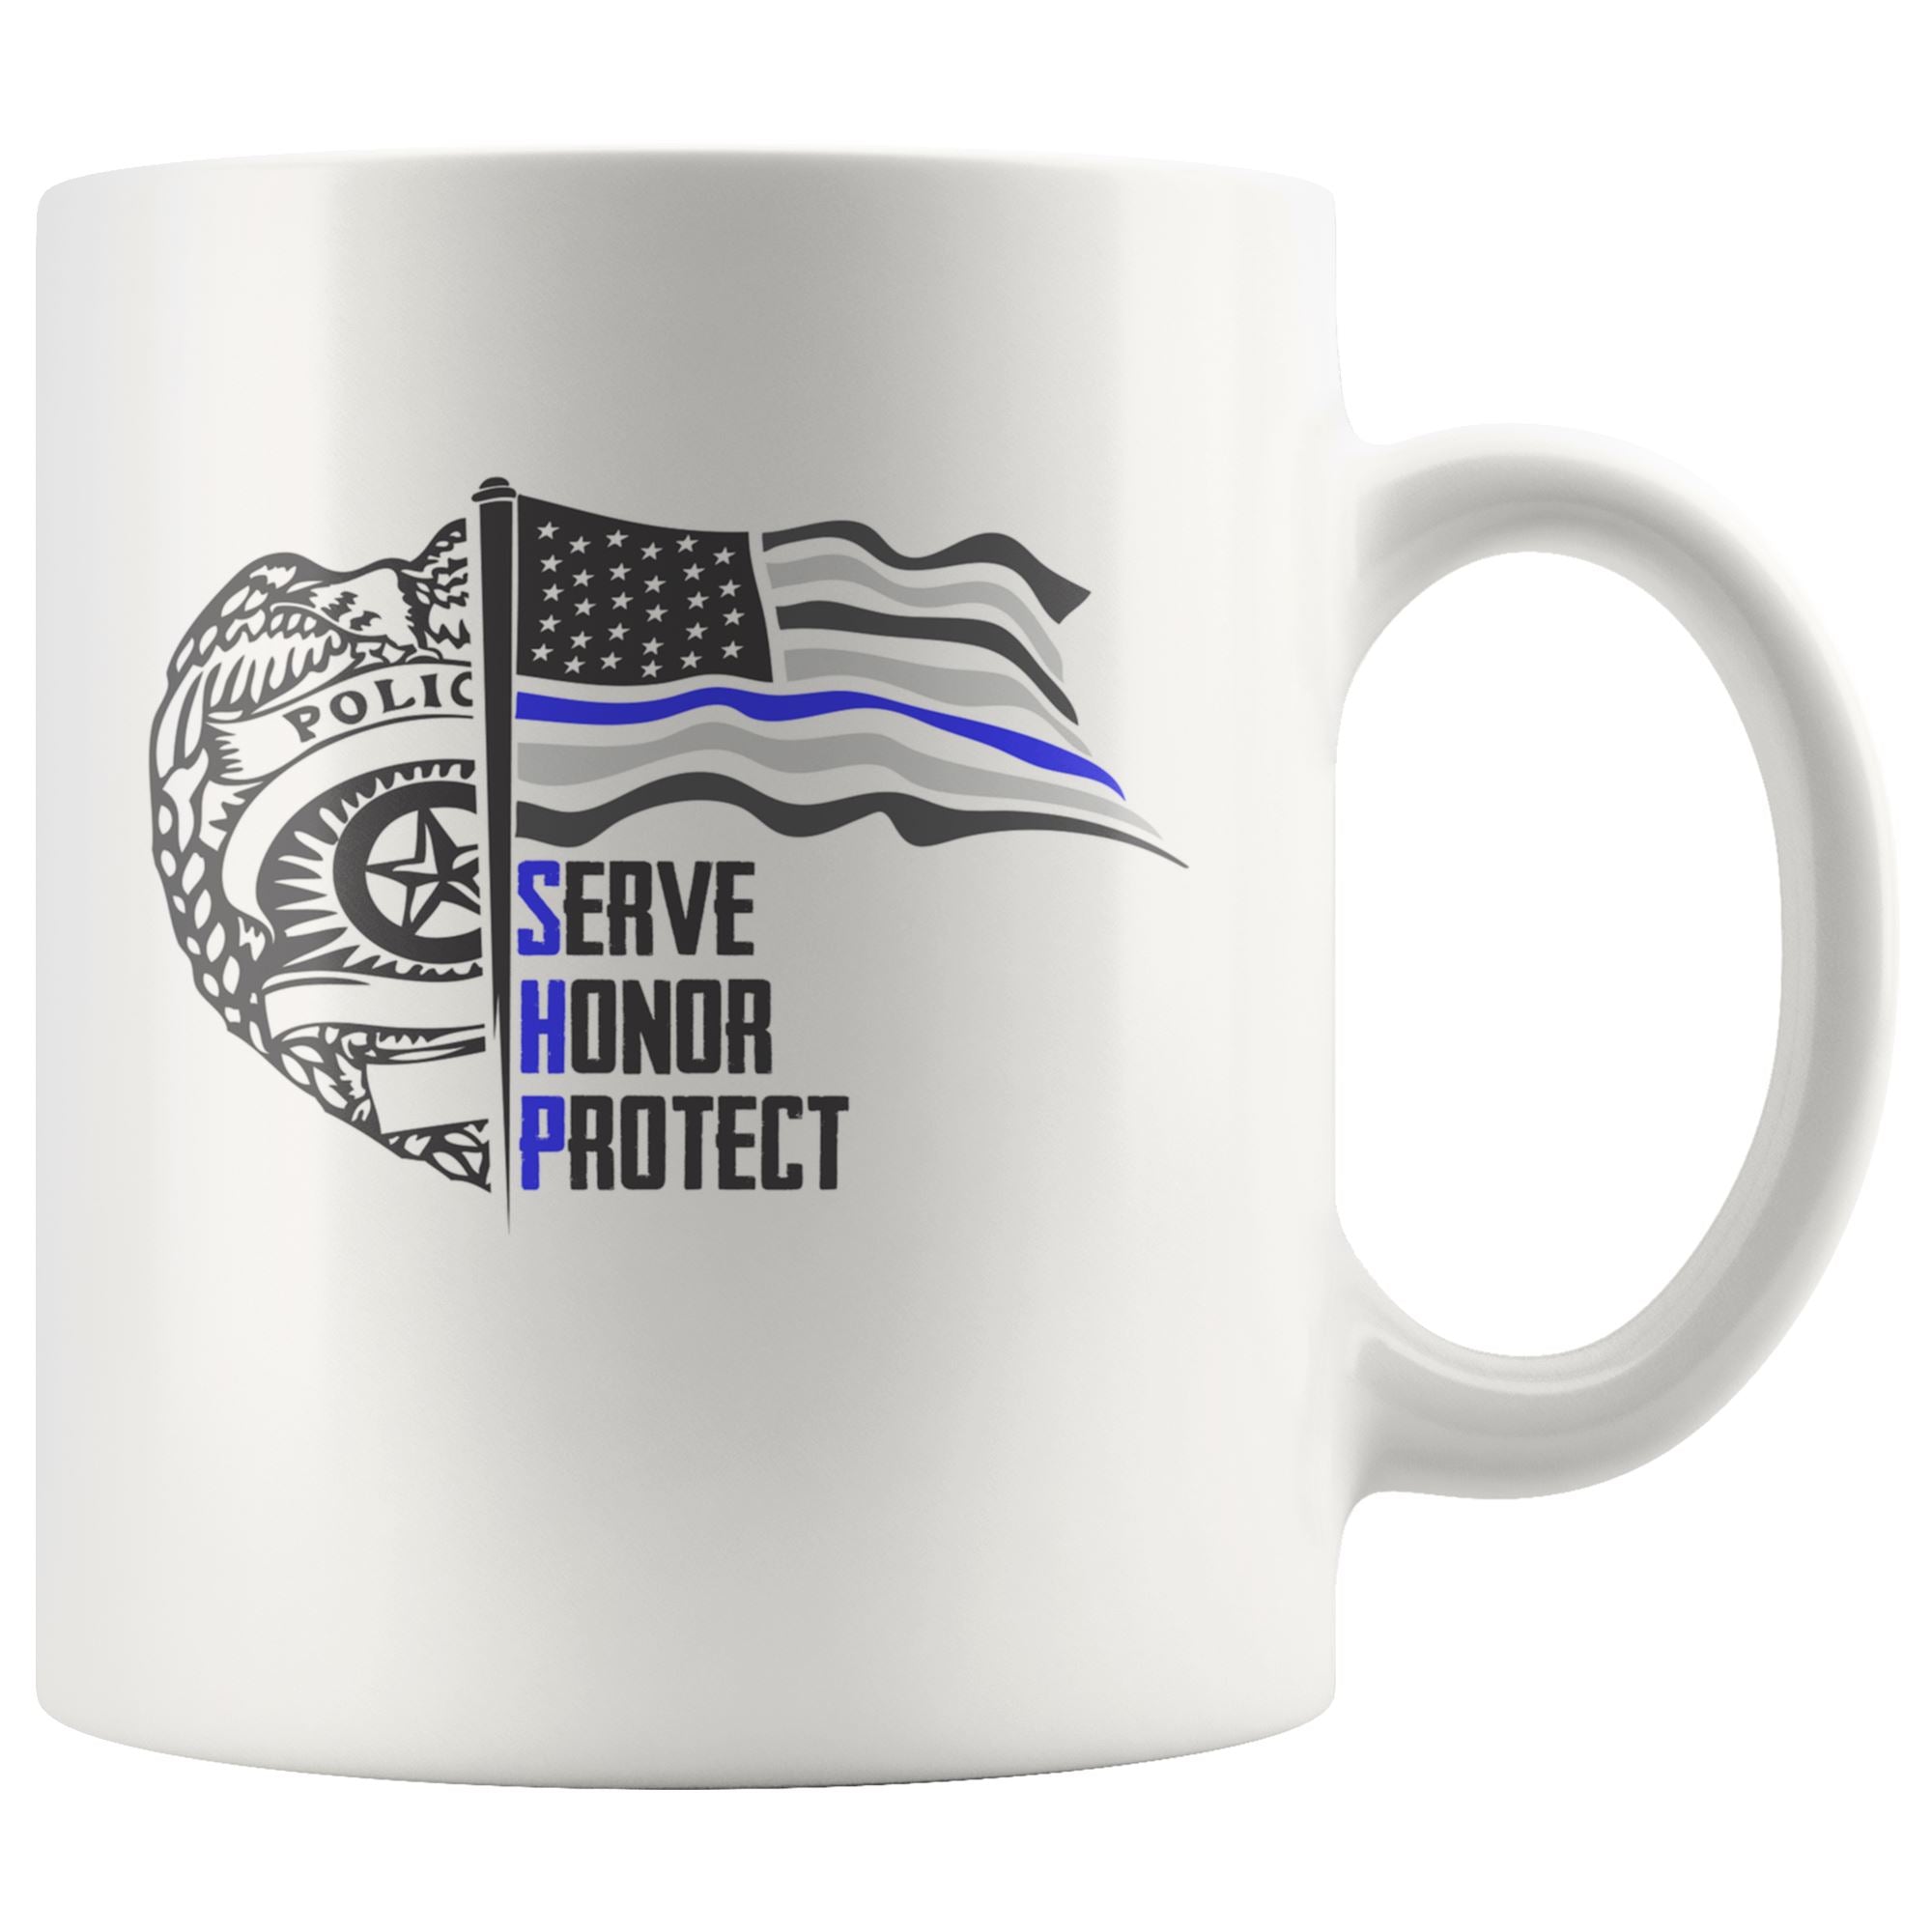 Serve Honor Protect Drinkware teelaunch 11oz Mug 